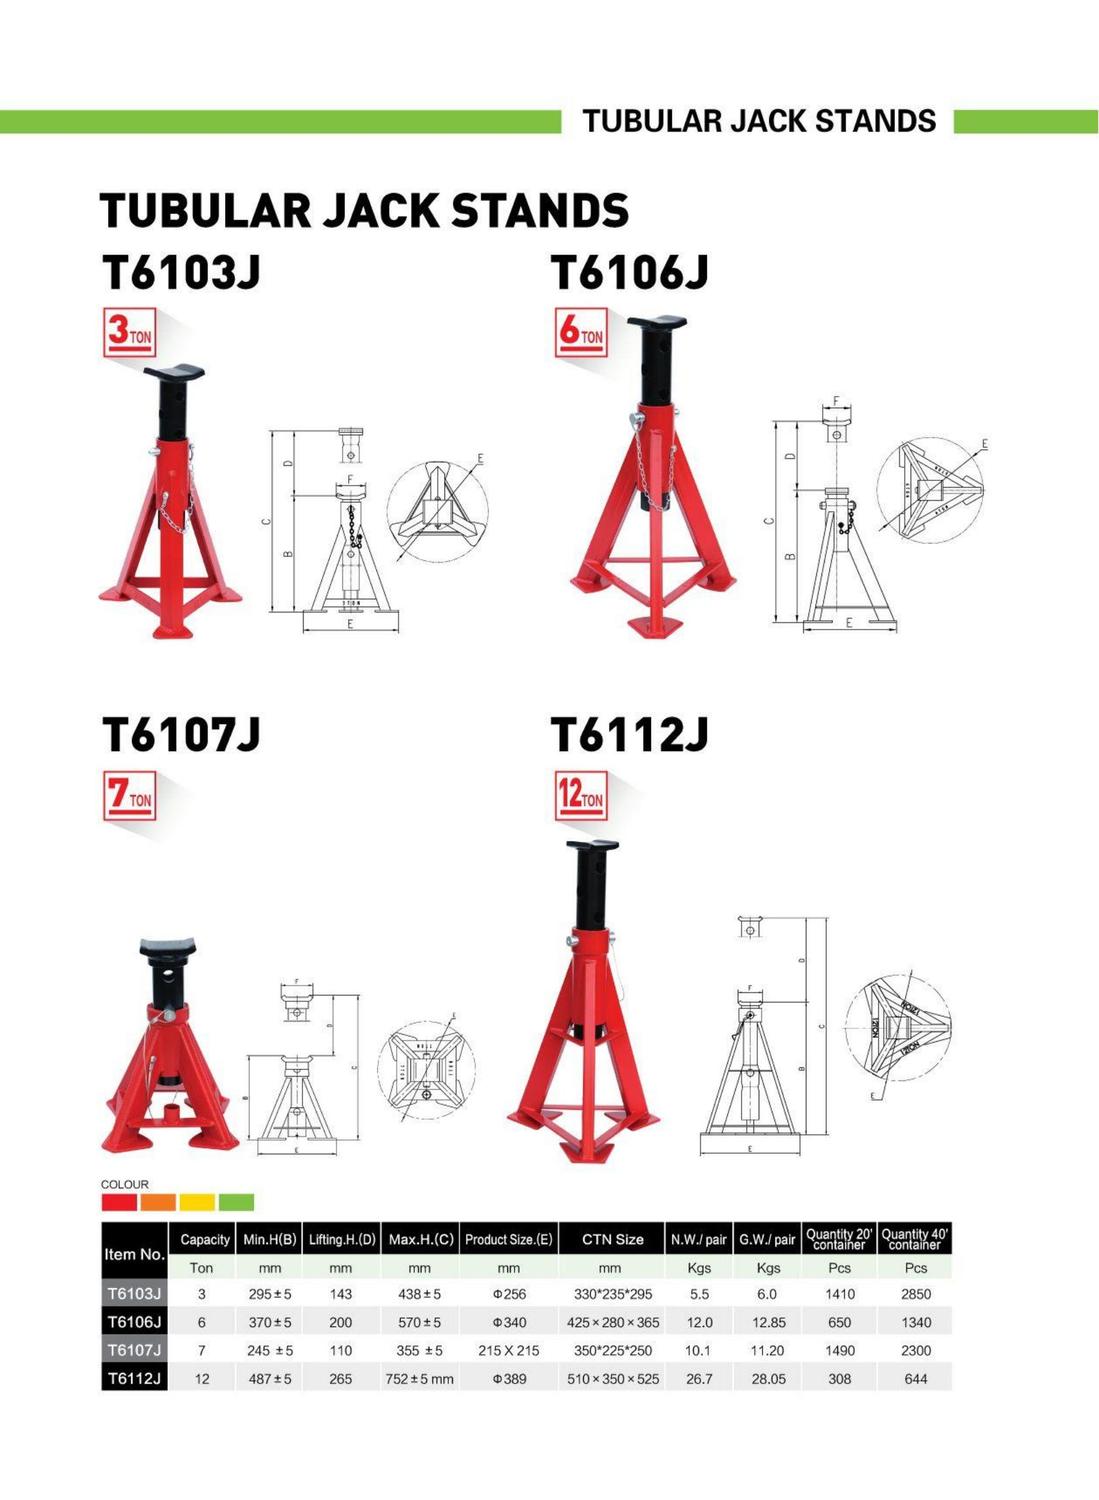 Tubular Jack Stands (2).jpg